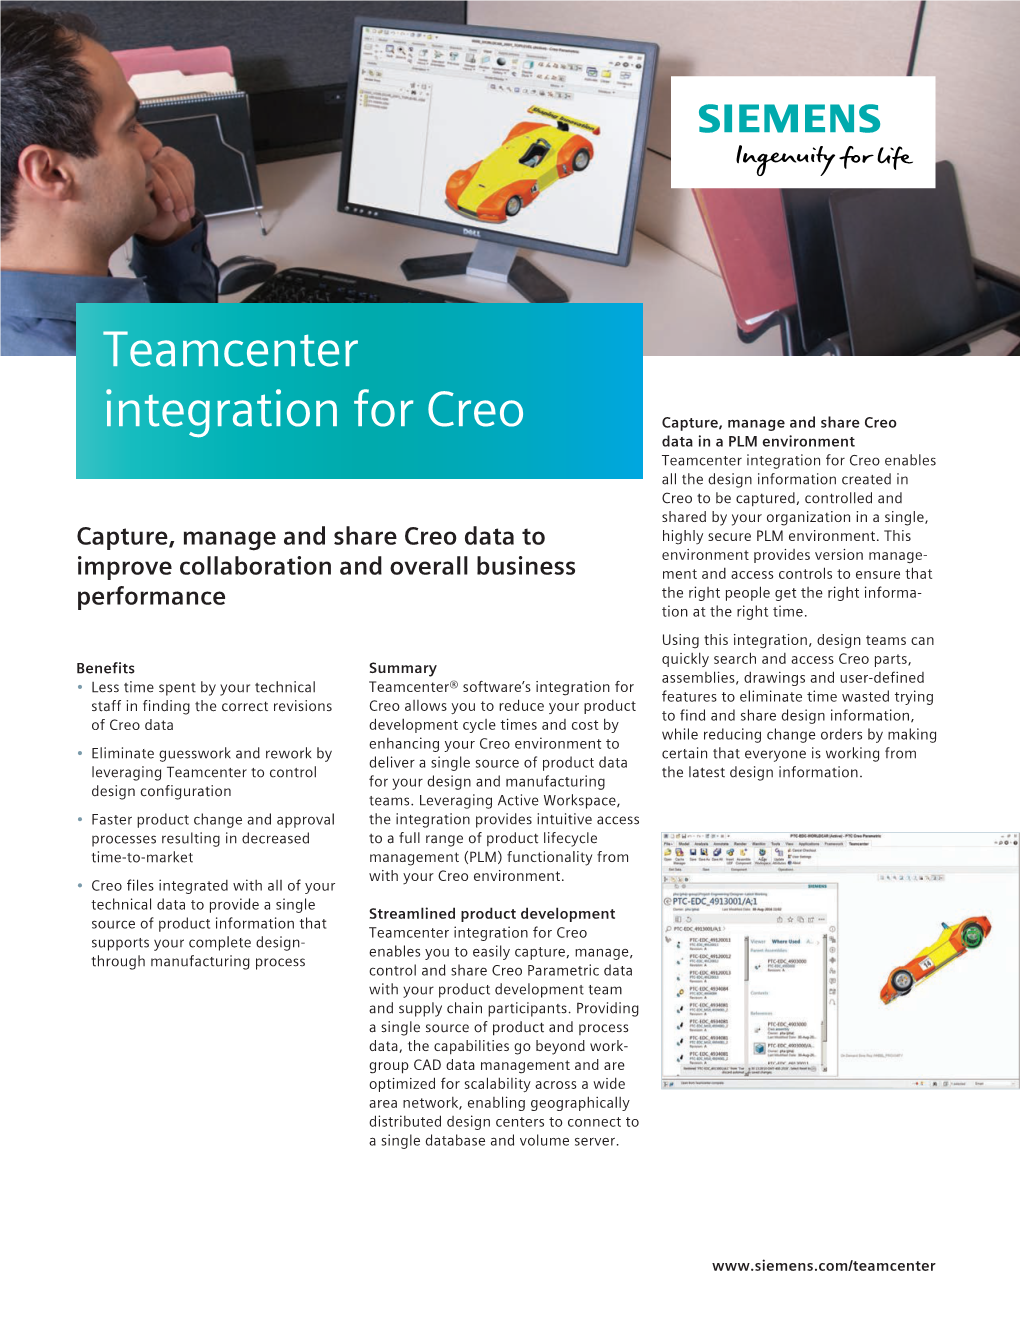 Teamcenter Integration for Creo Fact Sheet